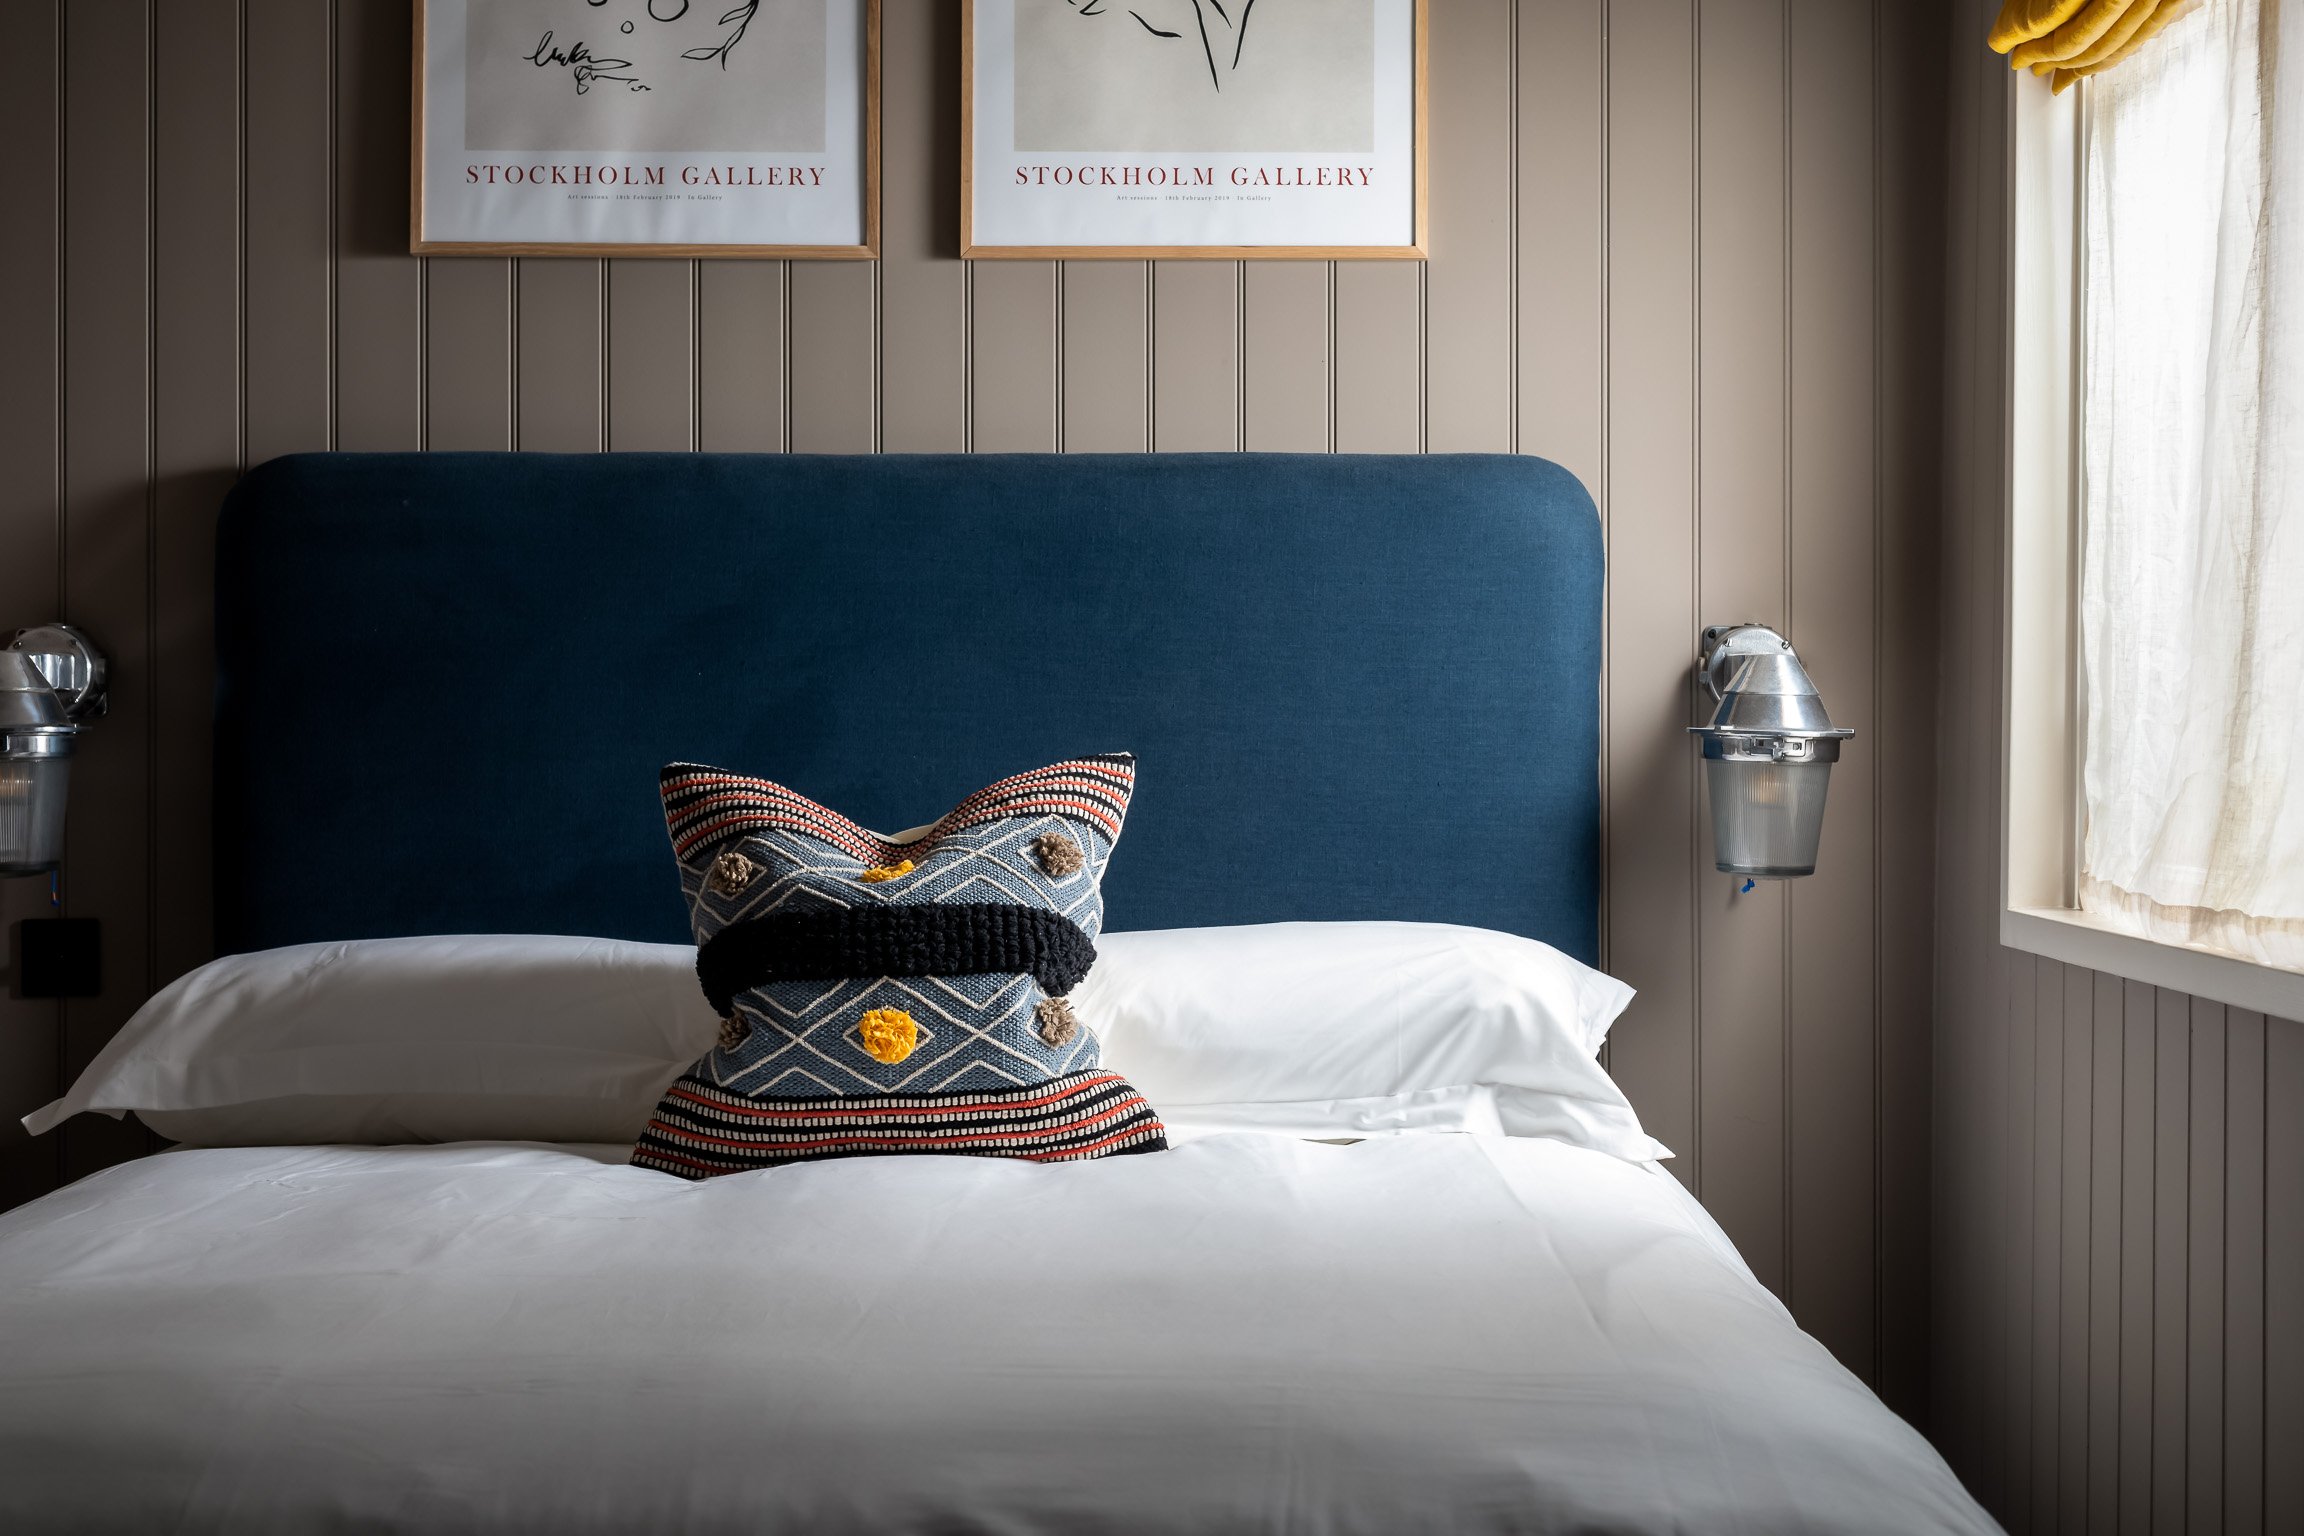 3 - Bedroom, Cotswold, Gloucestershire, Hotel, Photographer.jpg